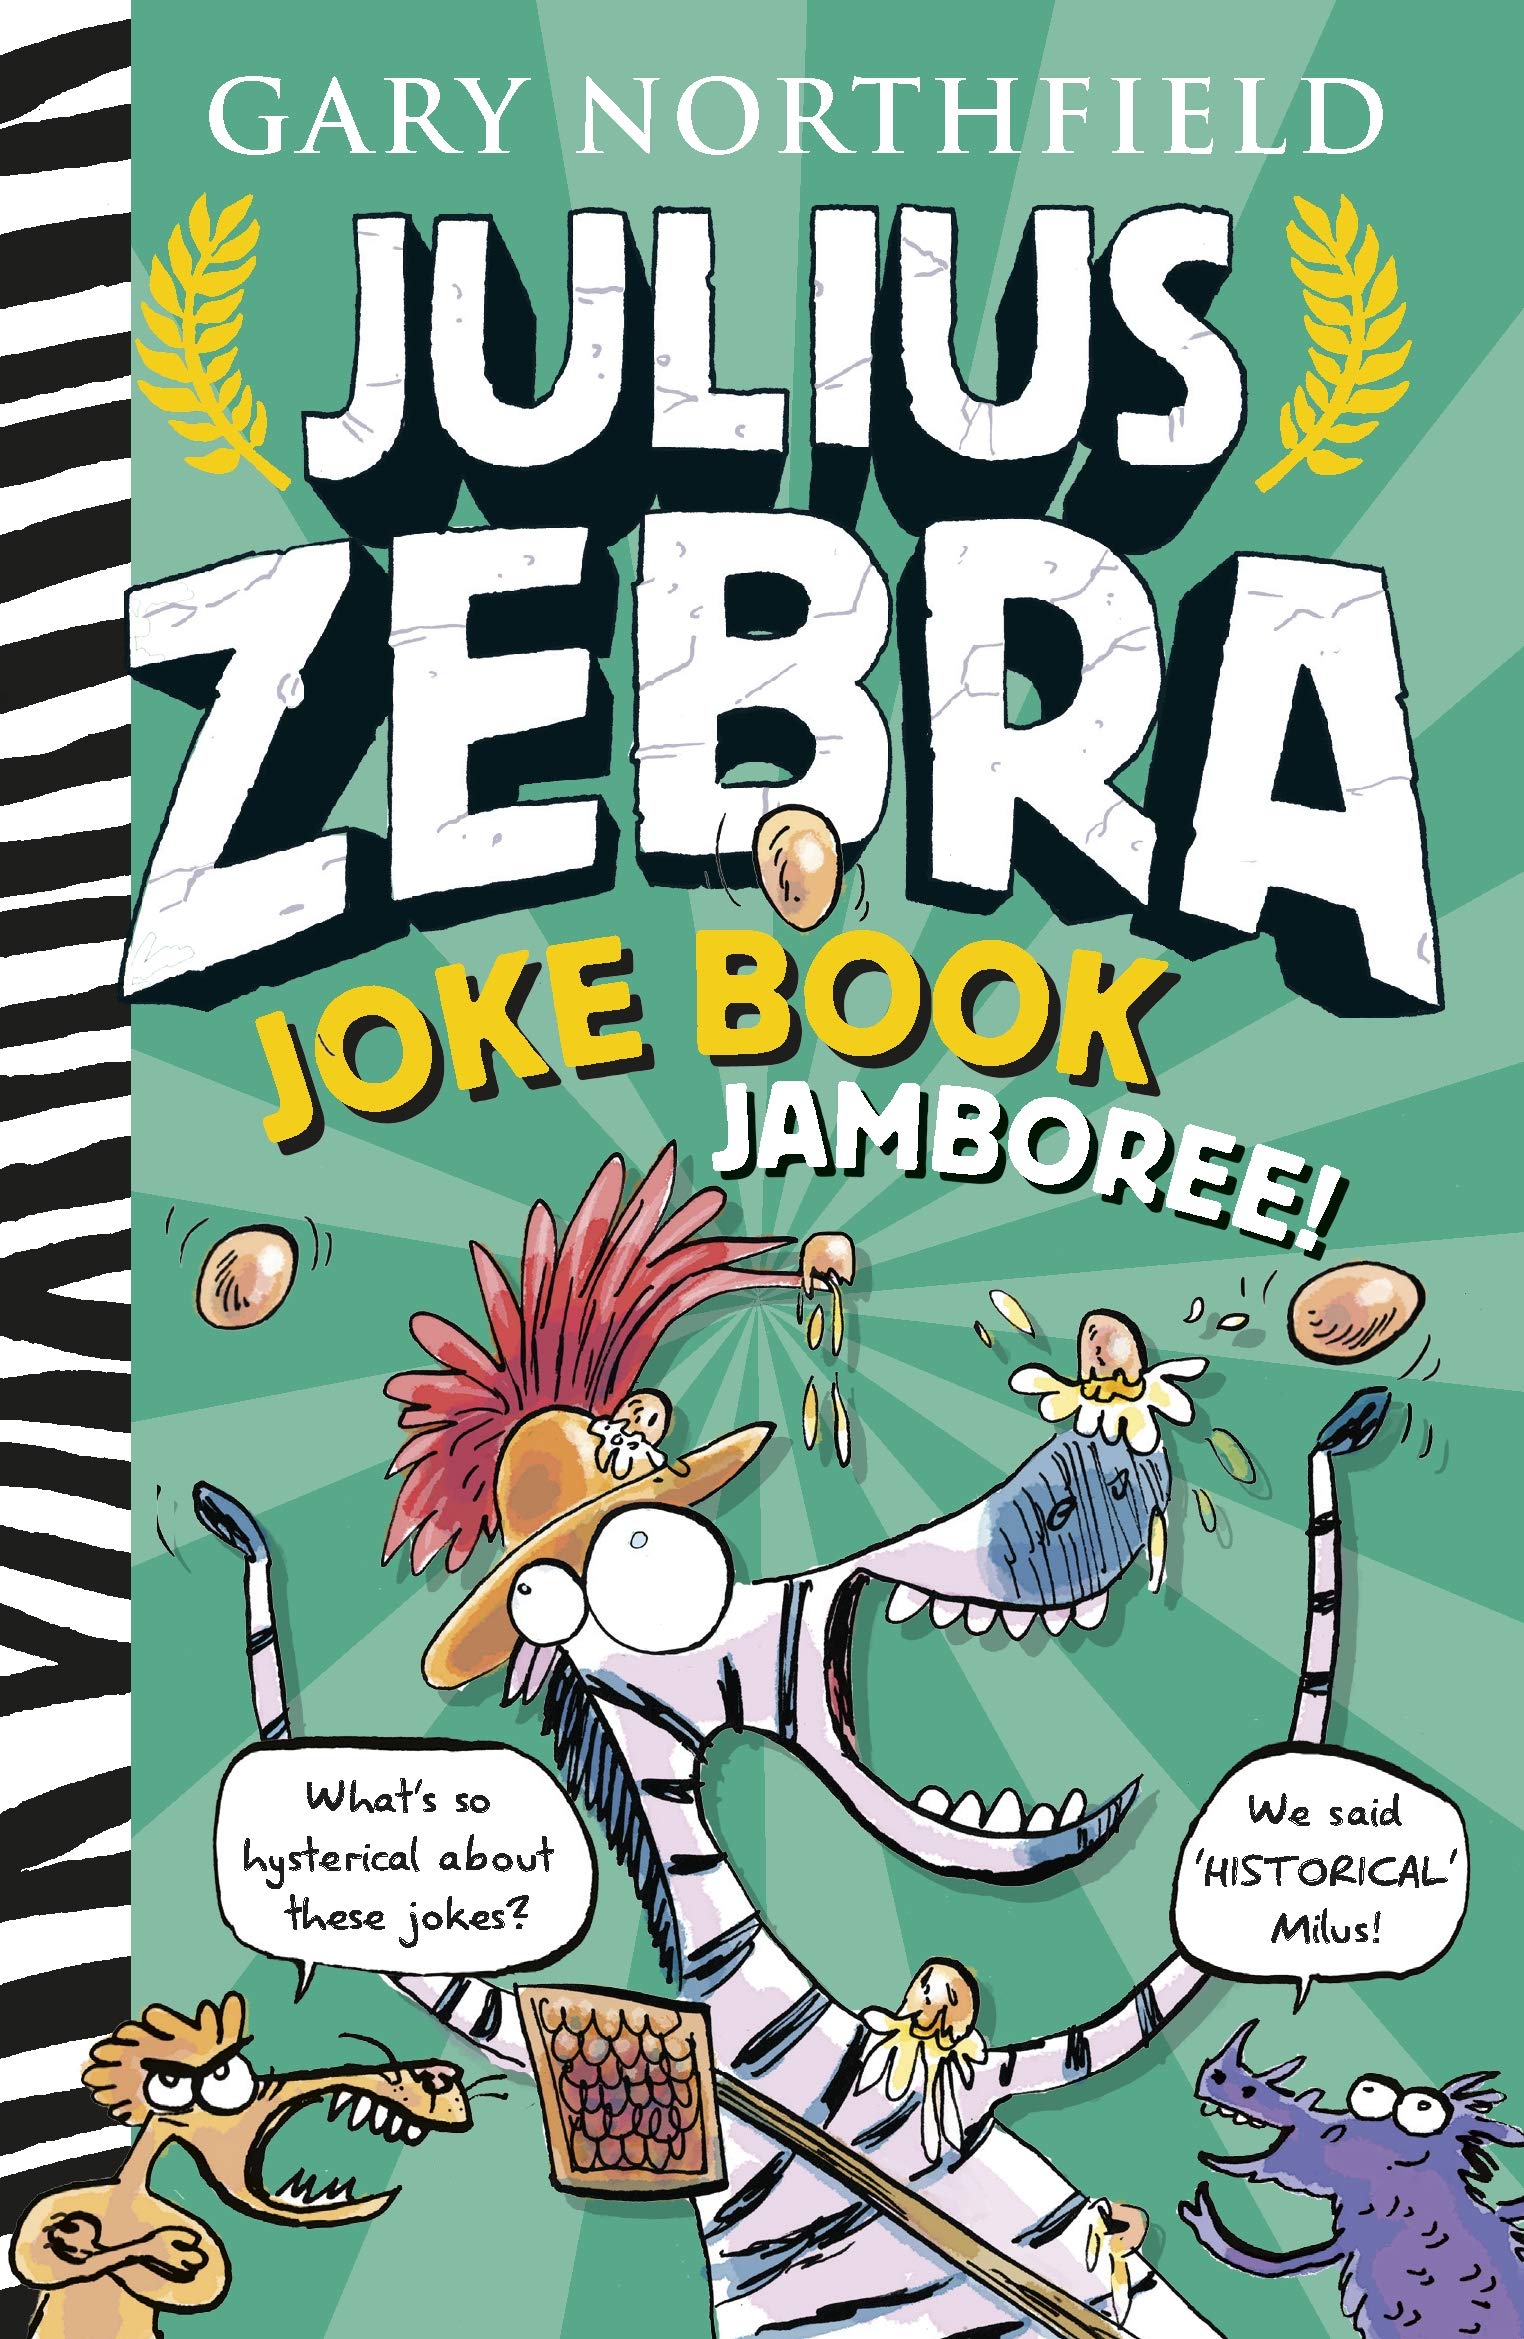 Zoe Zebra - Peppa Pig Board Book – Gobbledy Books